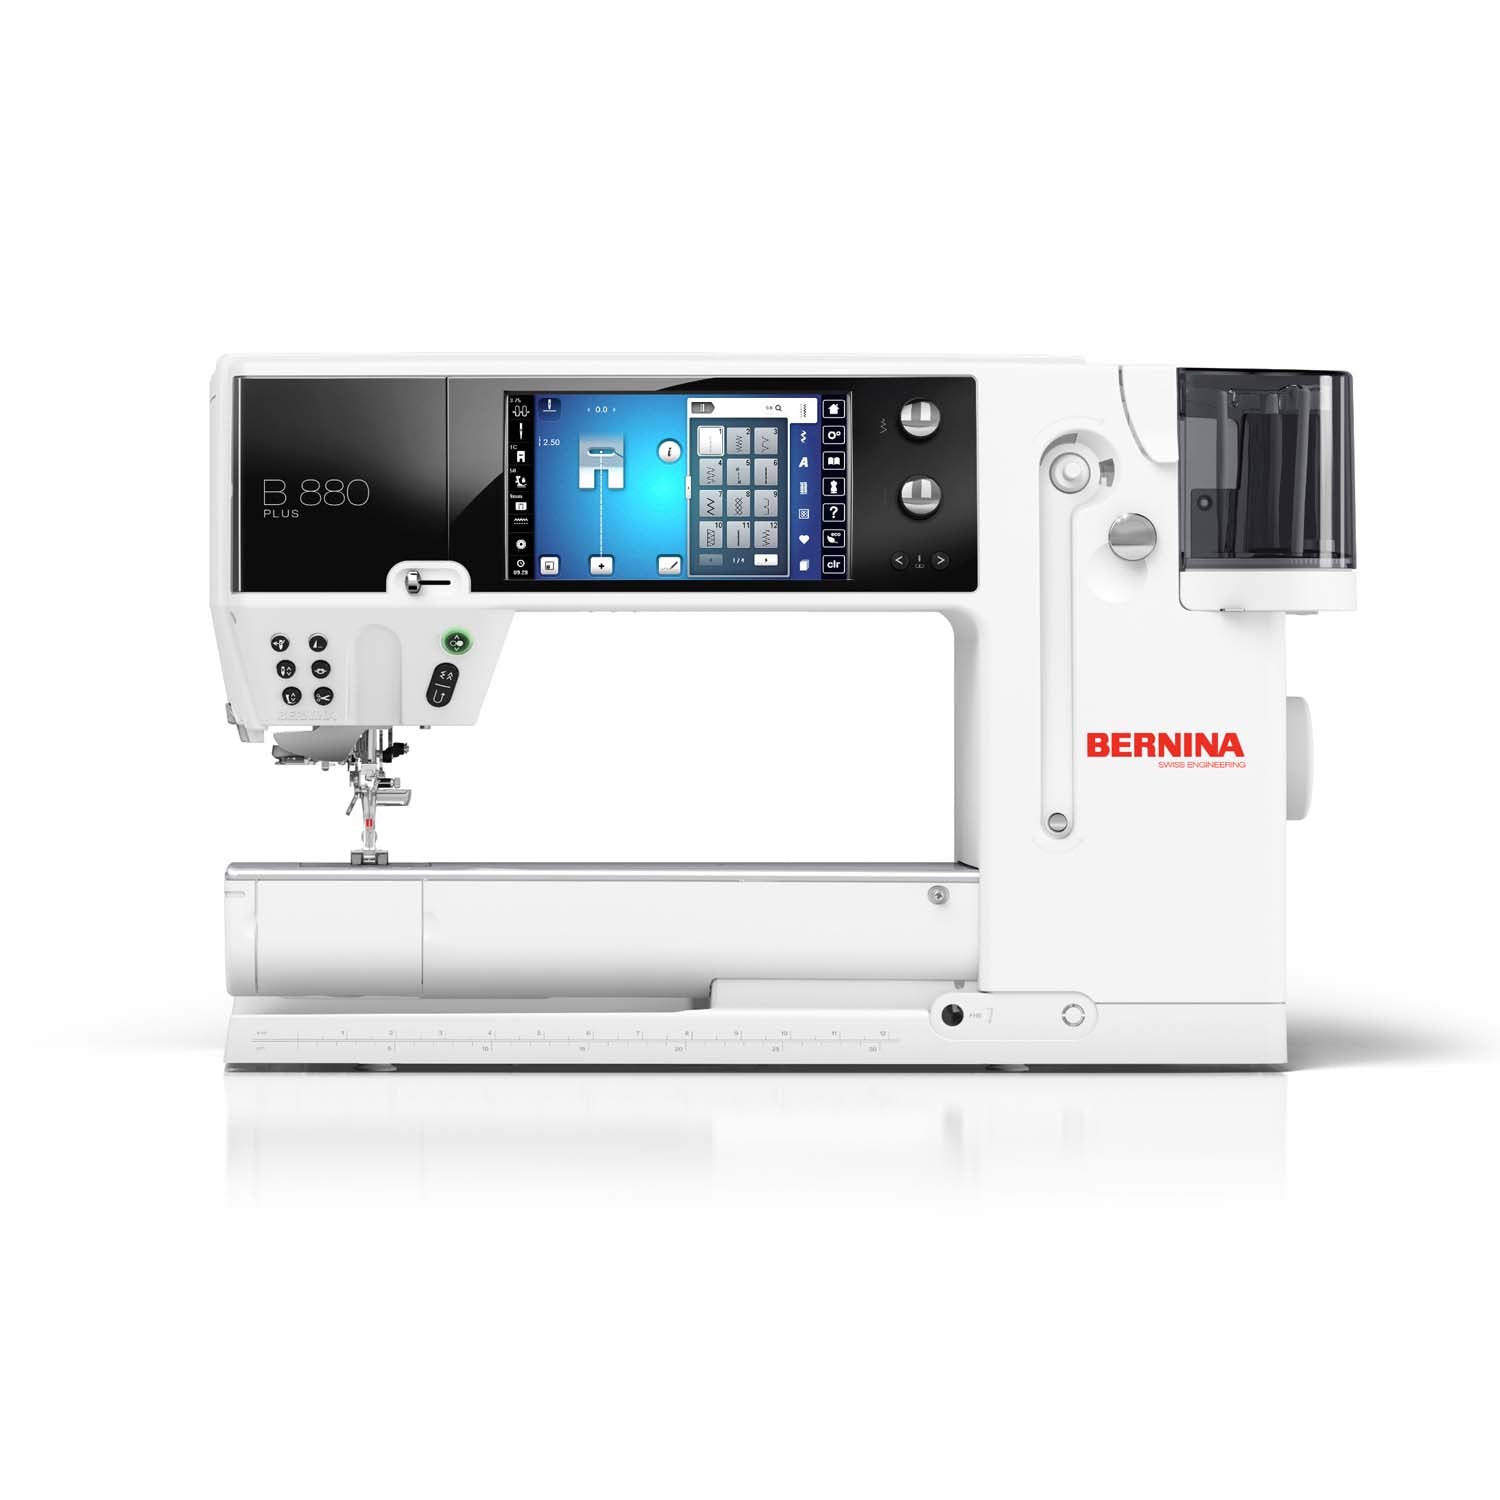 BERNINA 880 PLUS Sewing and Embroidery Machine